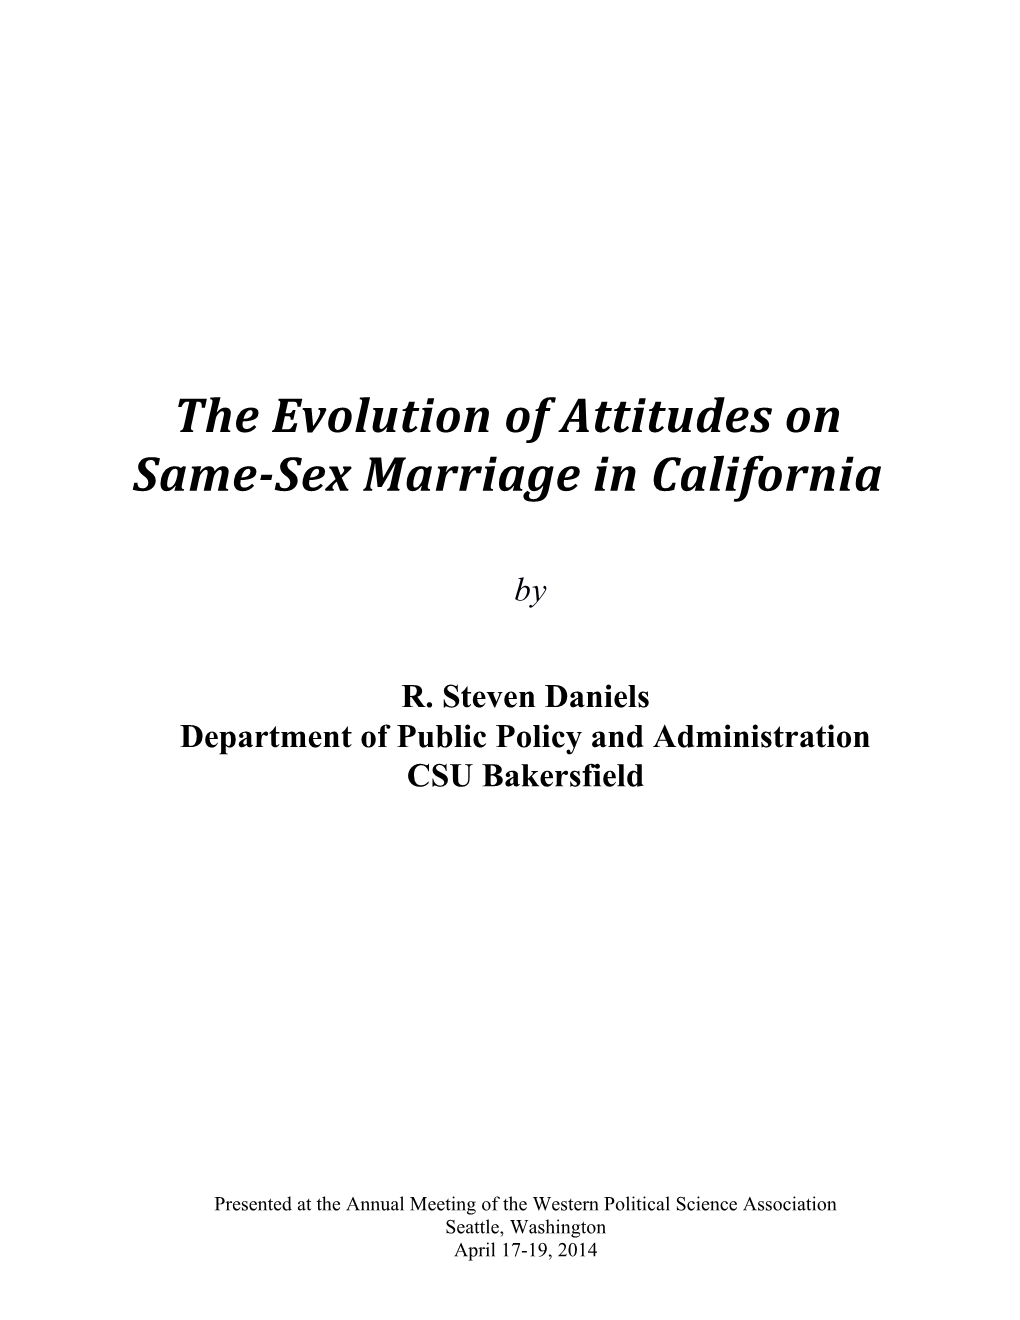 The Evolution of Attitudes on Same-Sex Marriage in California